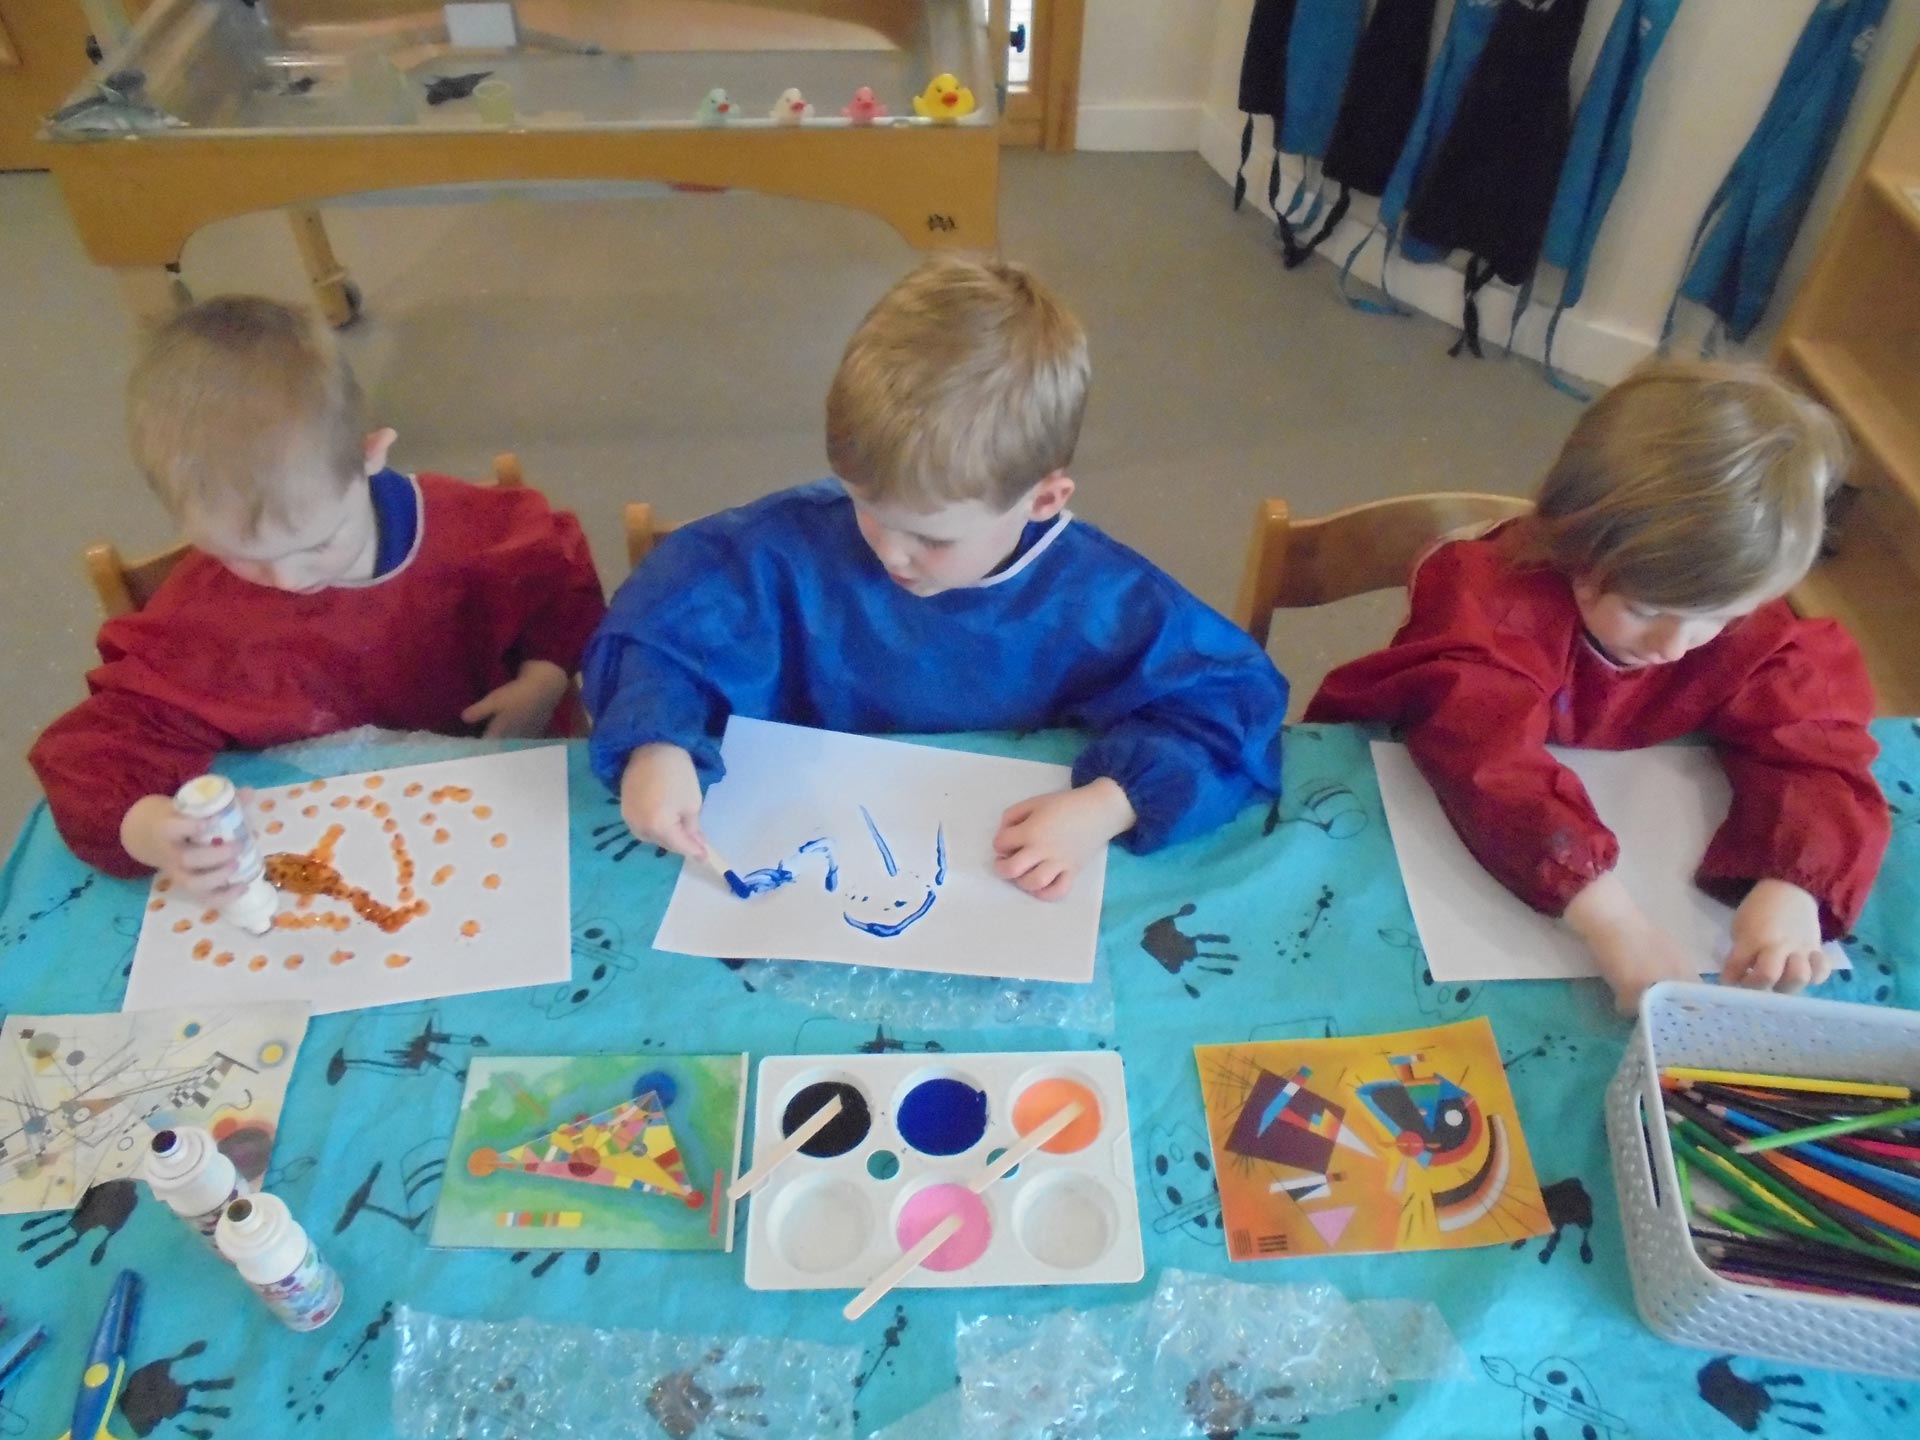 Timperley children study artist Kandinsky